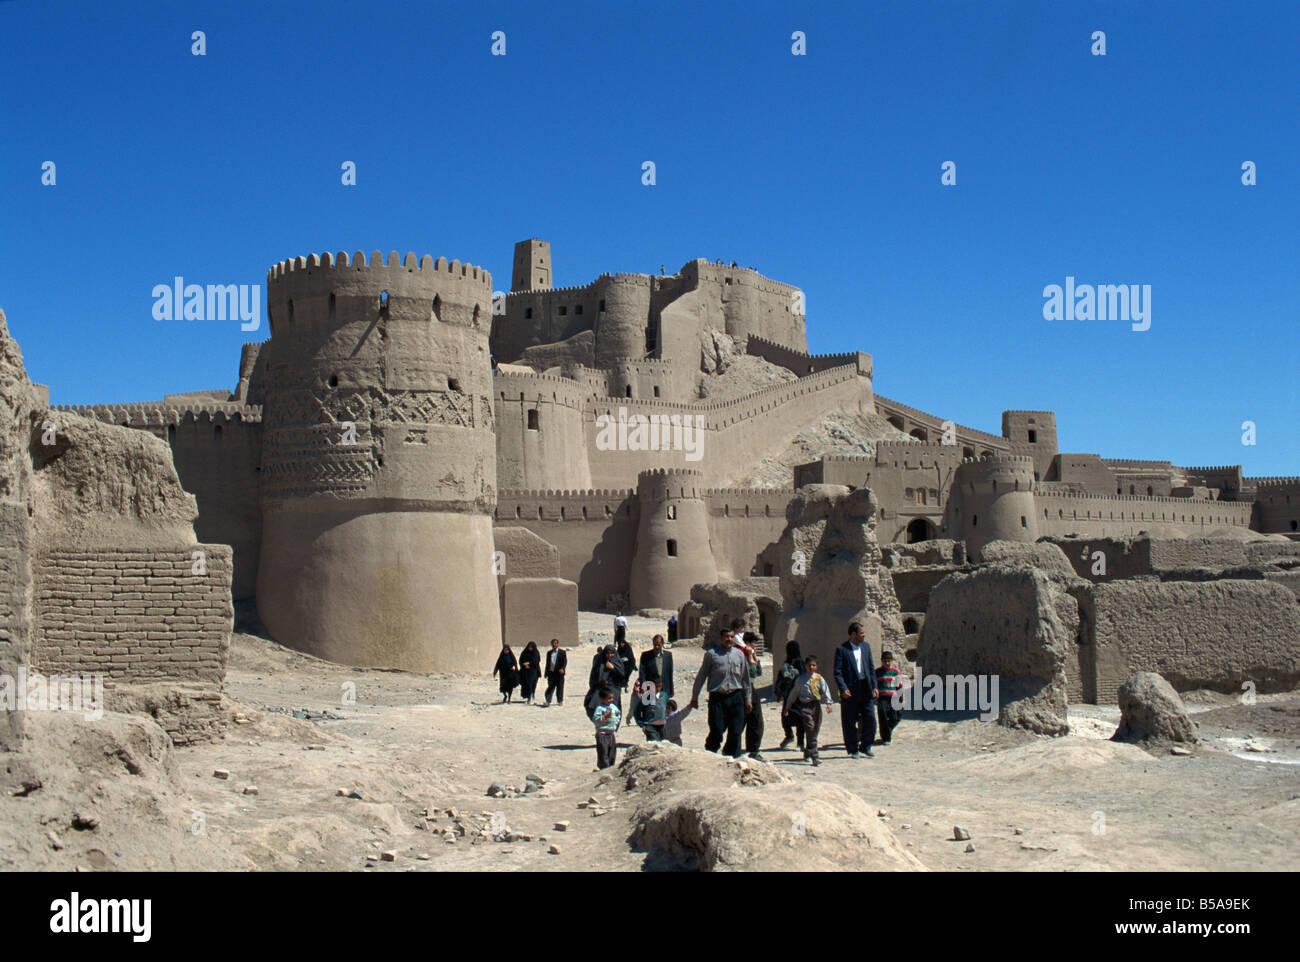 Medieval mud brick city with 17th century Safavid citadel, Arg-e Bam, Bam, UNESCO World Heritage Site, Iran, Middle East Stock Photo